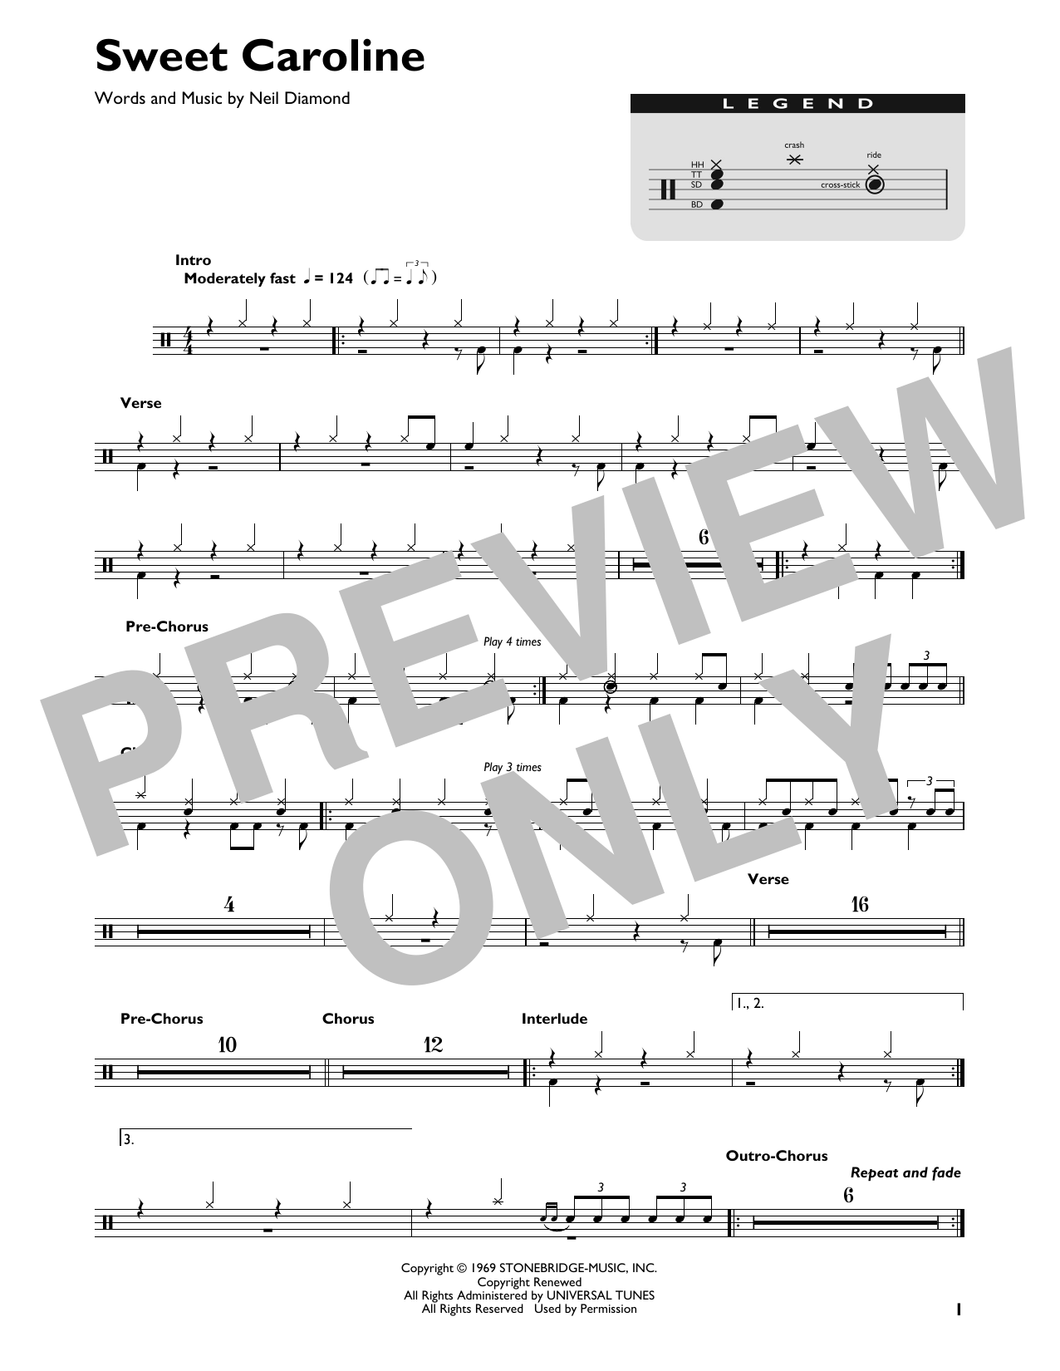 Sweet Caroline - Neil Diamond - Full Drum Transcription / Drum Sheet Music - SheetMusicDirect DT